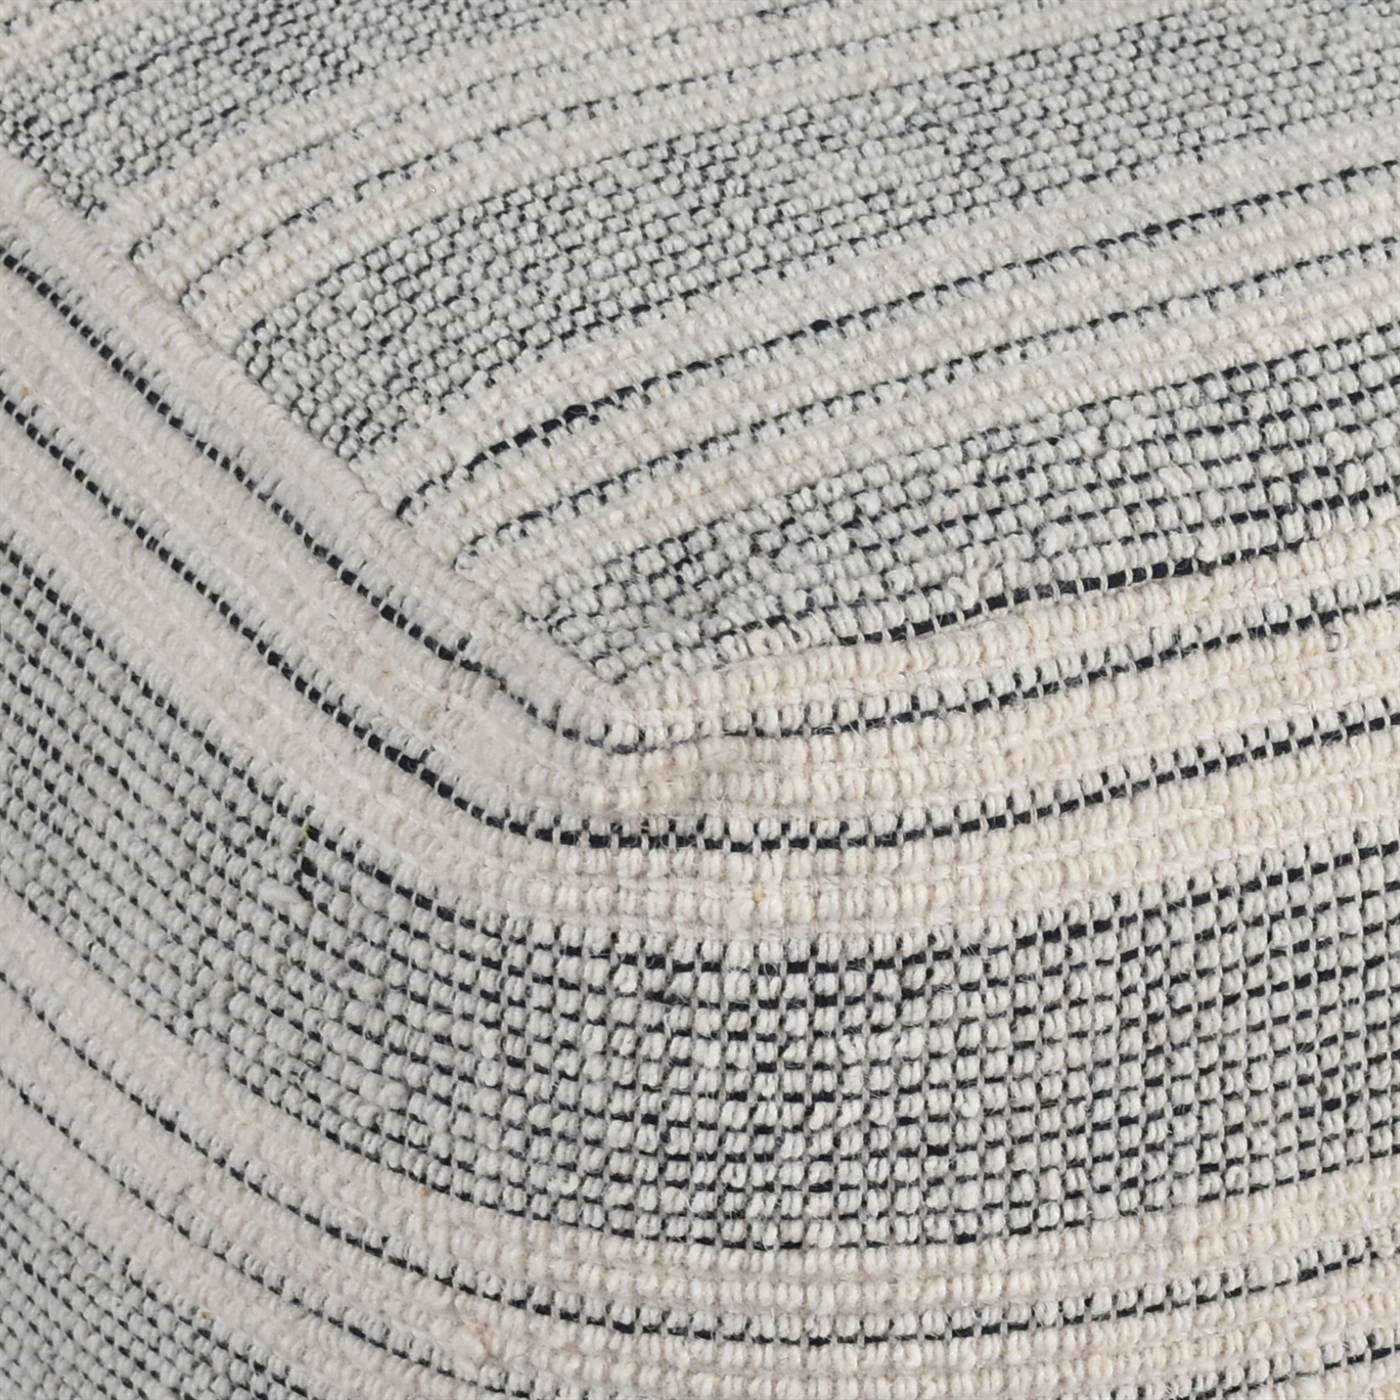 Calmar Pouf, 40x40x40 cm, Natural White, Charcoal, Wool, Hand Woven, Handwoven, Flat Weave